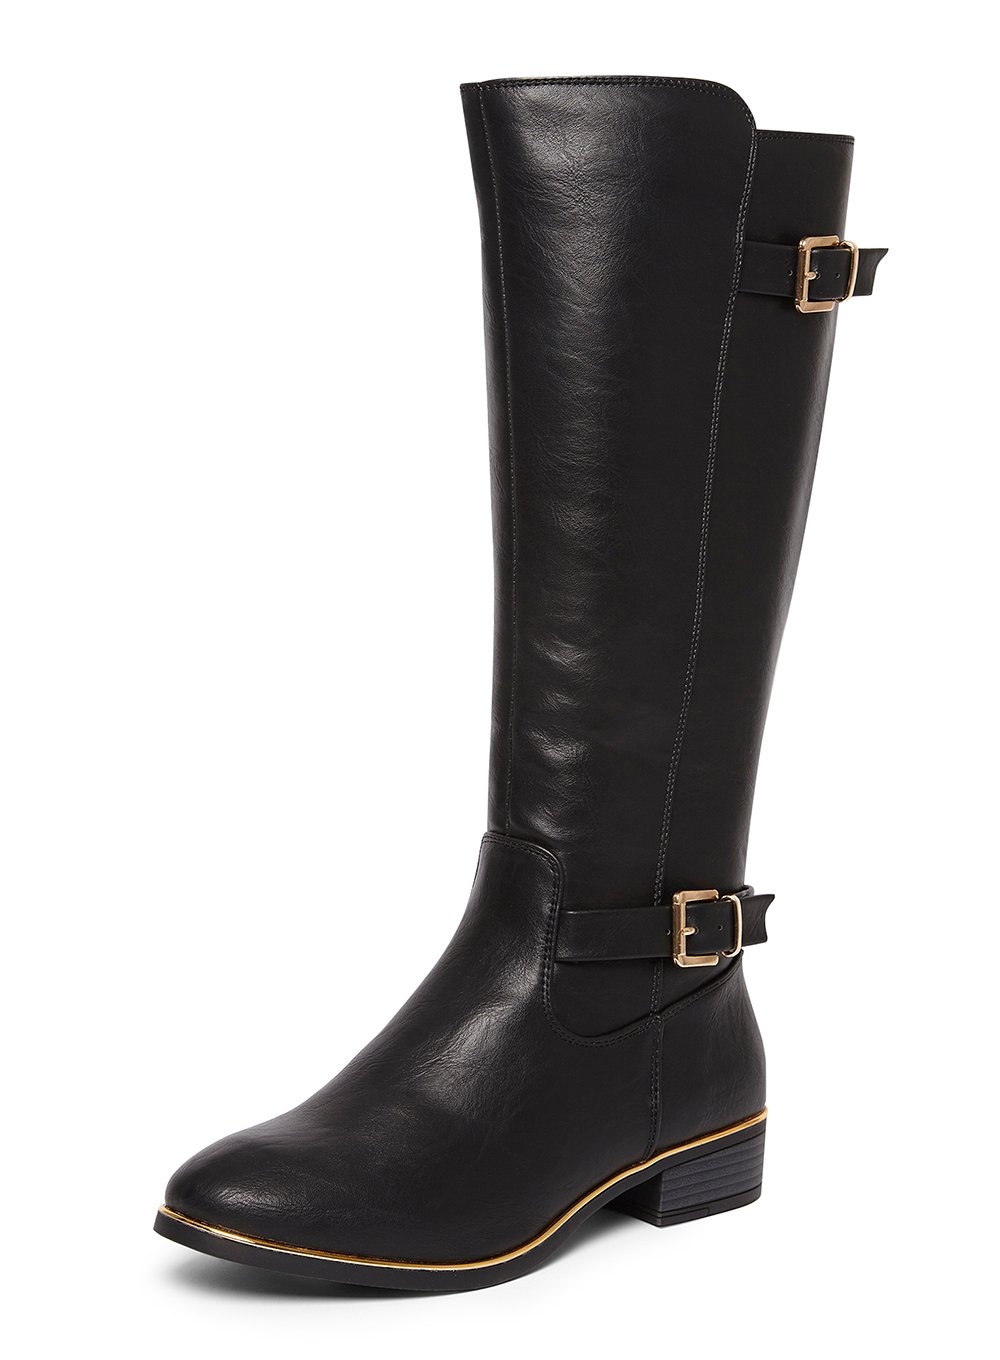 ladies flat black boots size 6